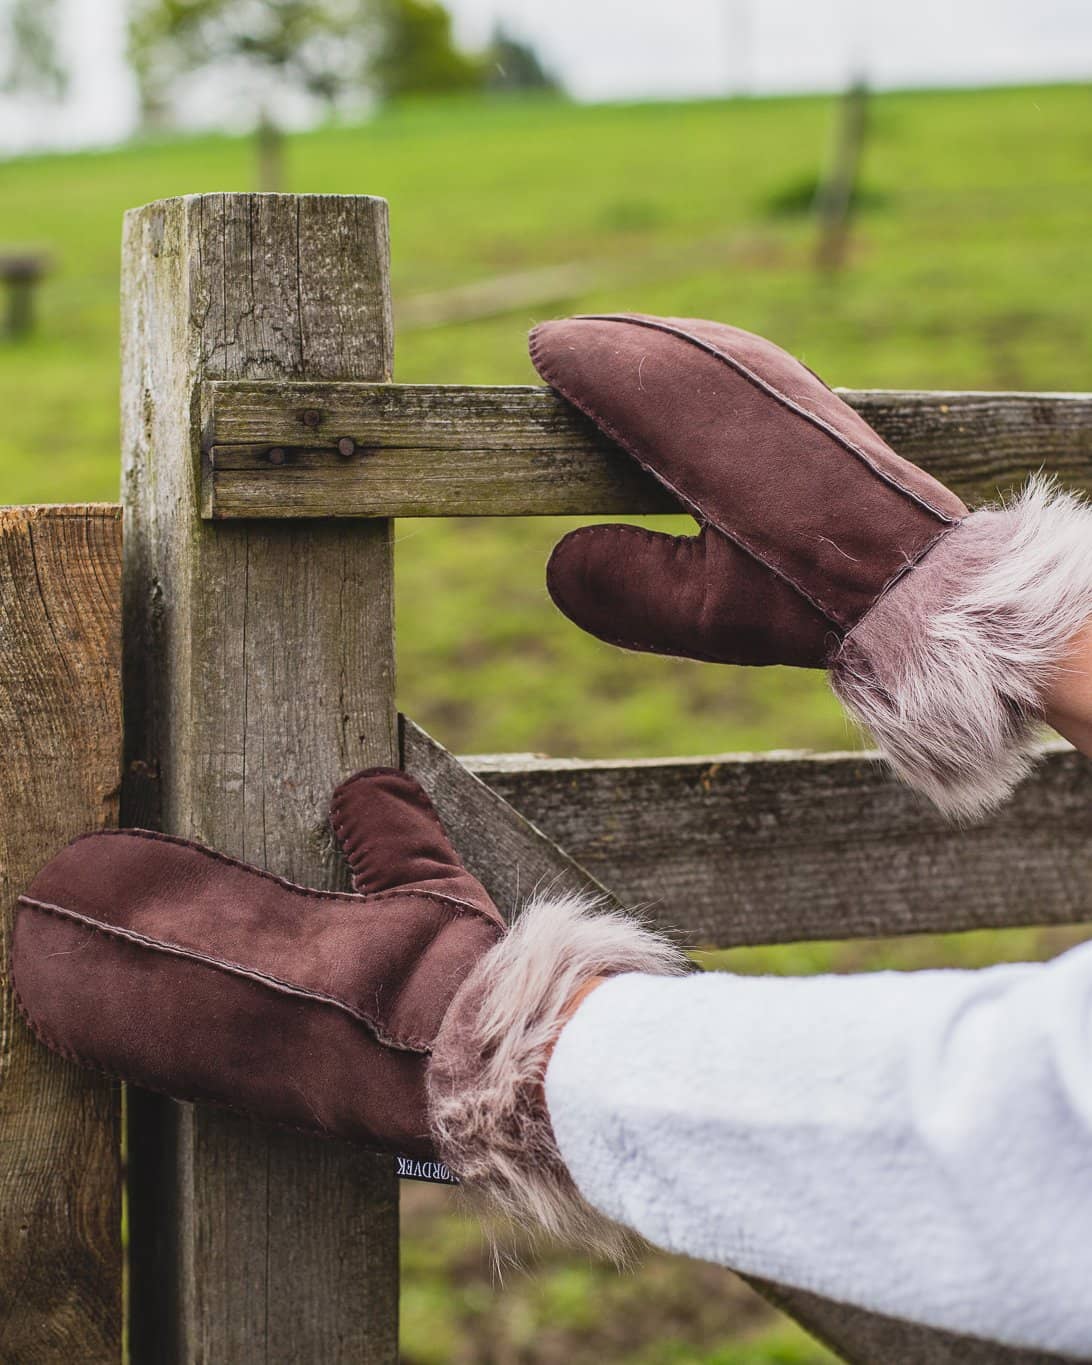 Nordvek womens sheepskin mittens chocolate colour opening wooden gate in field